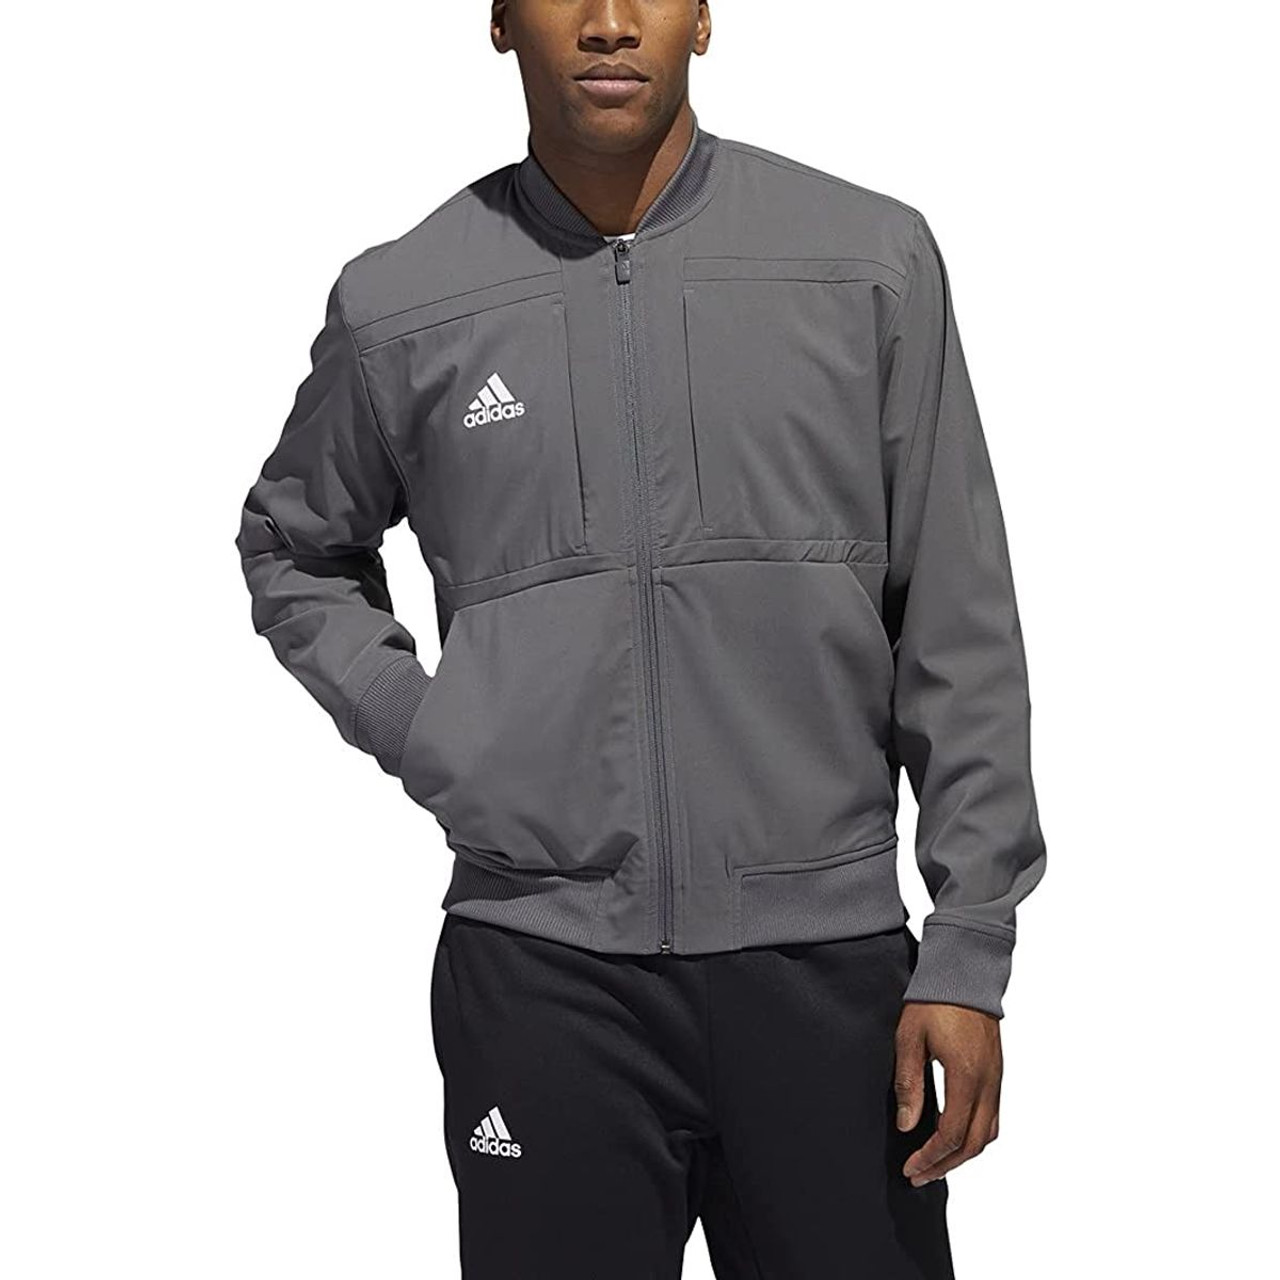  Adidas Men's Casual Urban Bomber Jacket product image